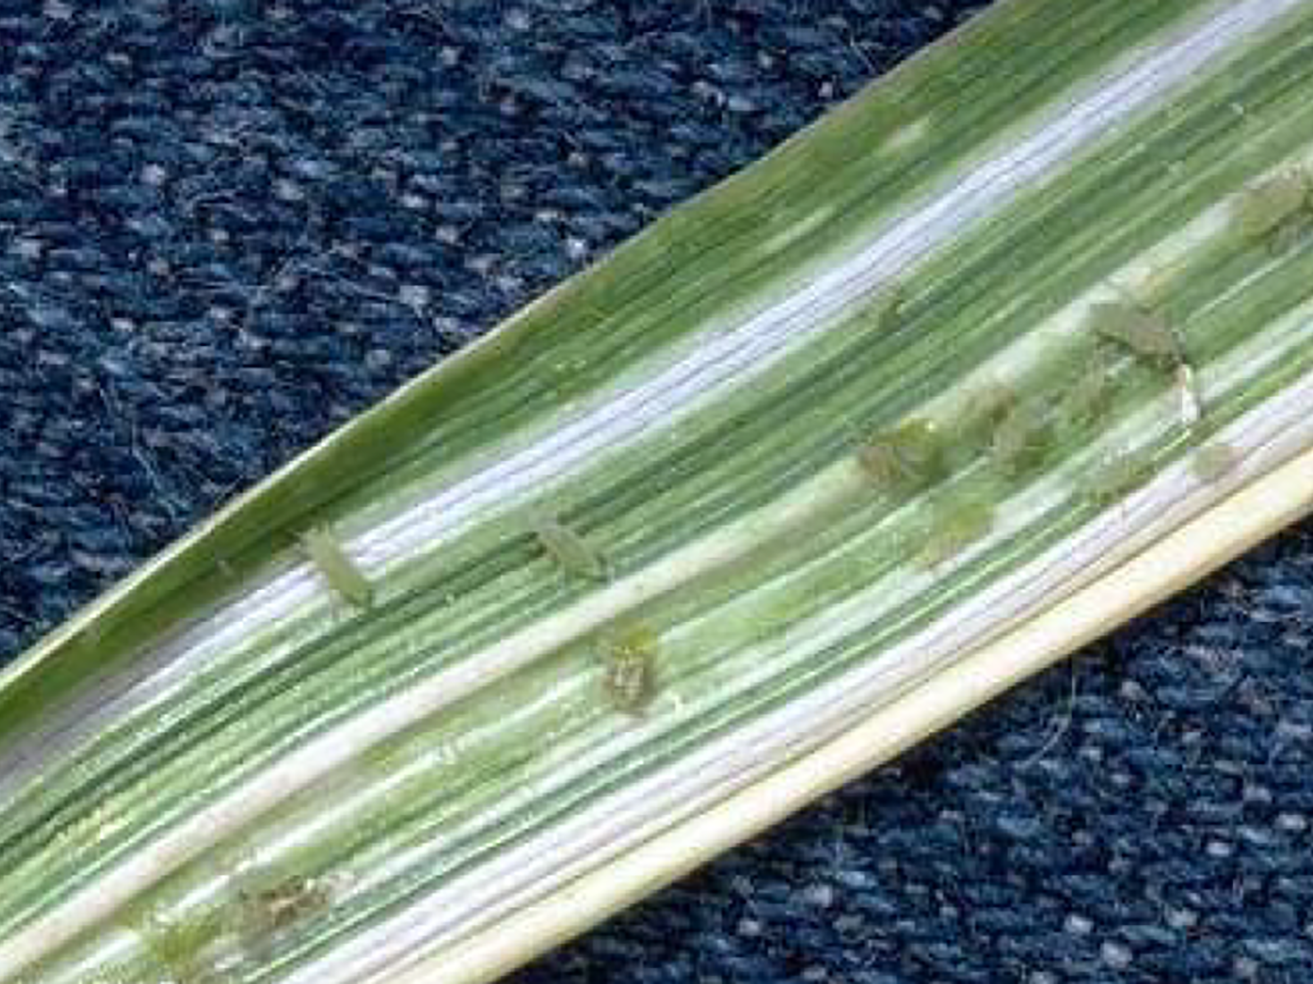 Fig. 6. Russian wheat aphid feeding damage.